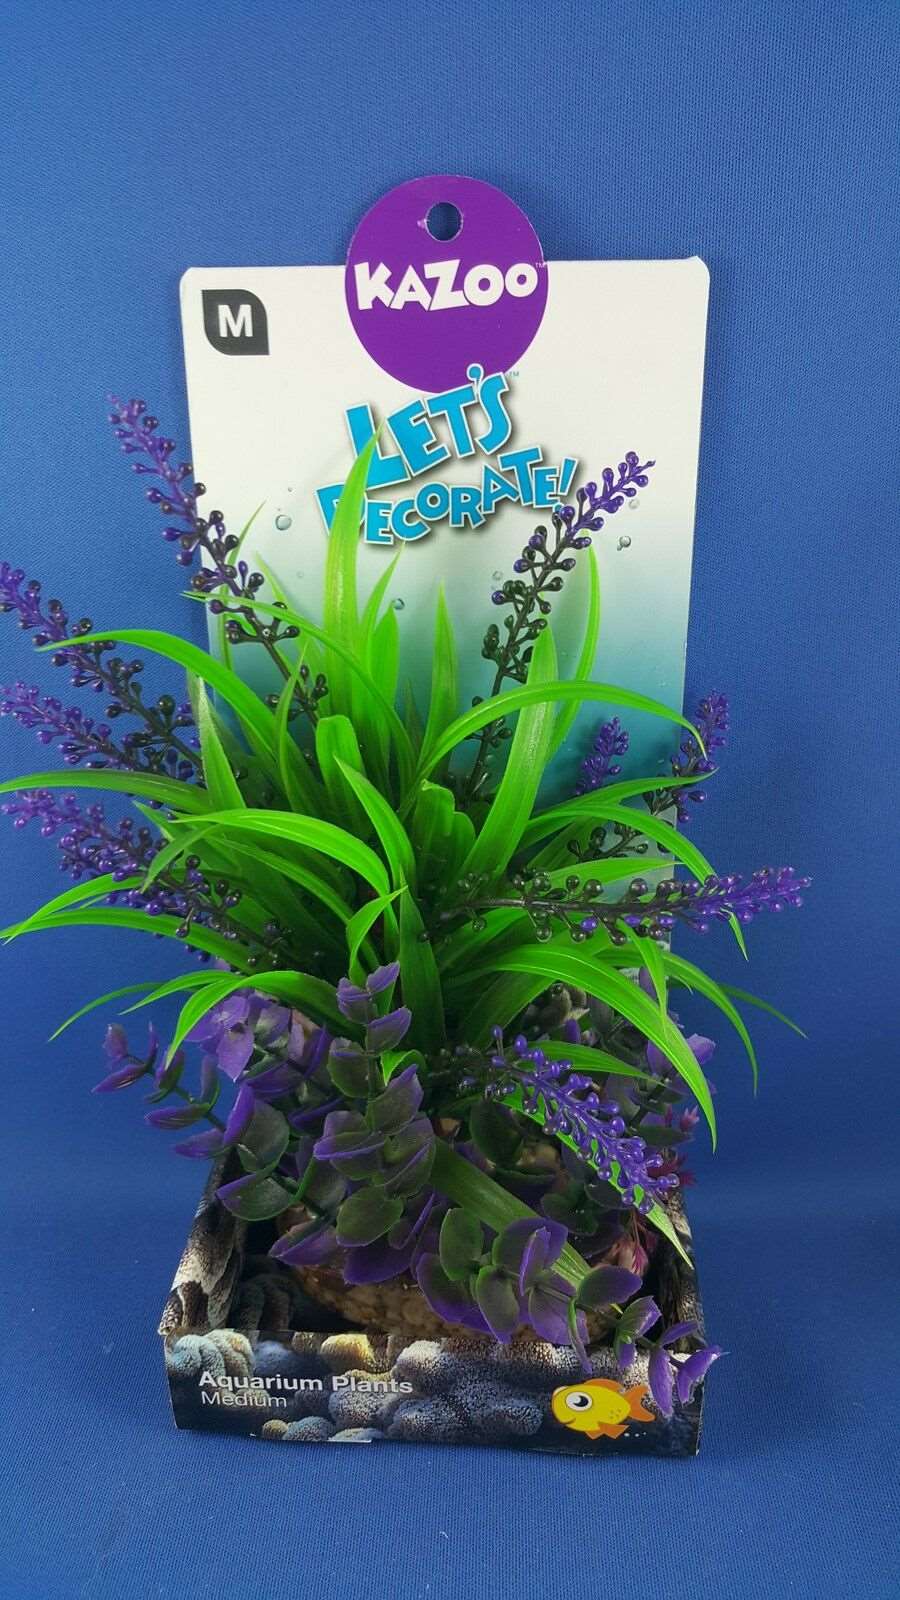 Kazoo aquarium plant, medium size, green & purple leaves with solid pebble base